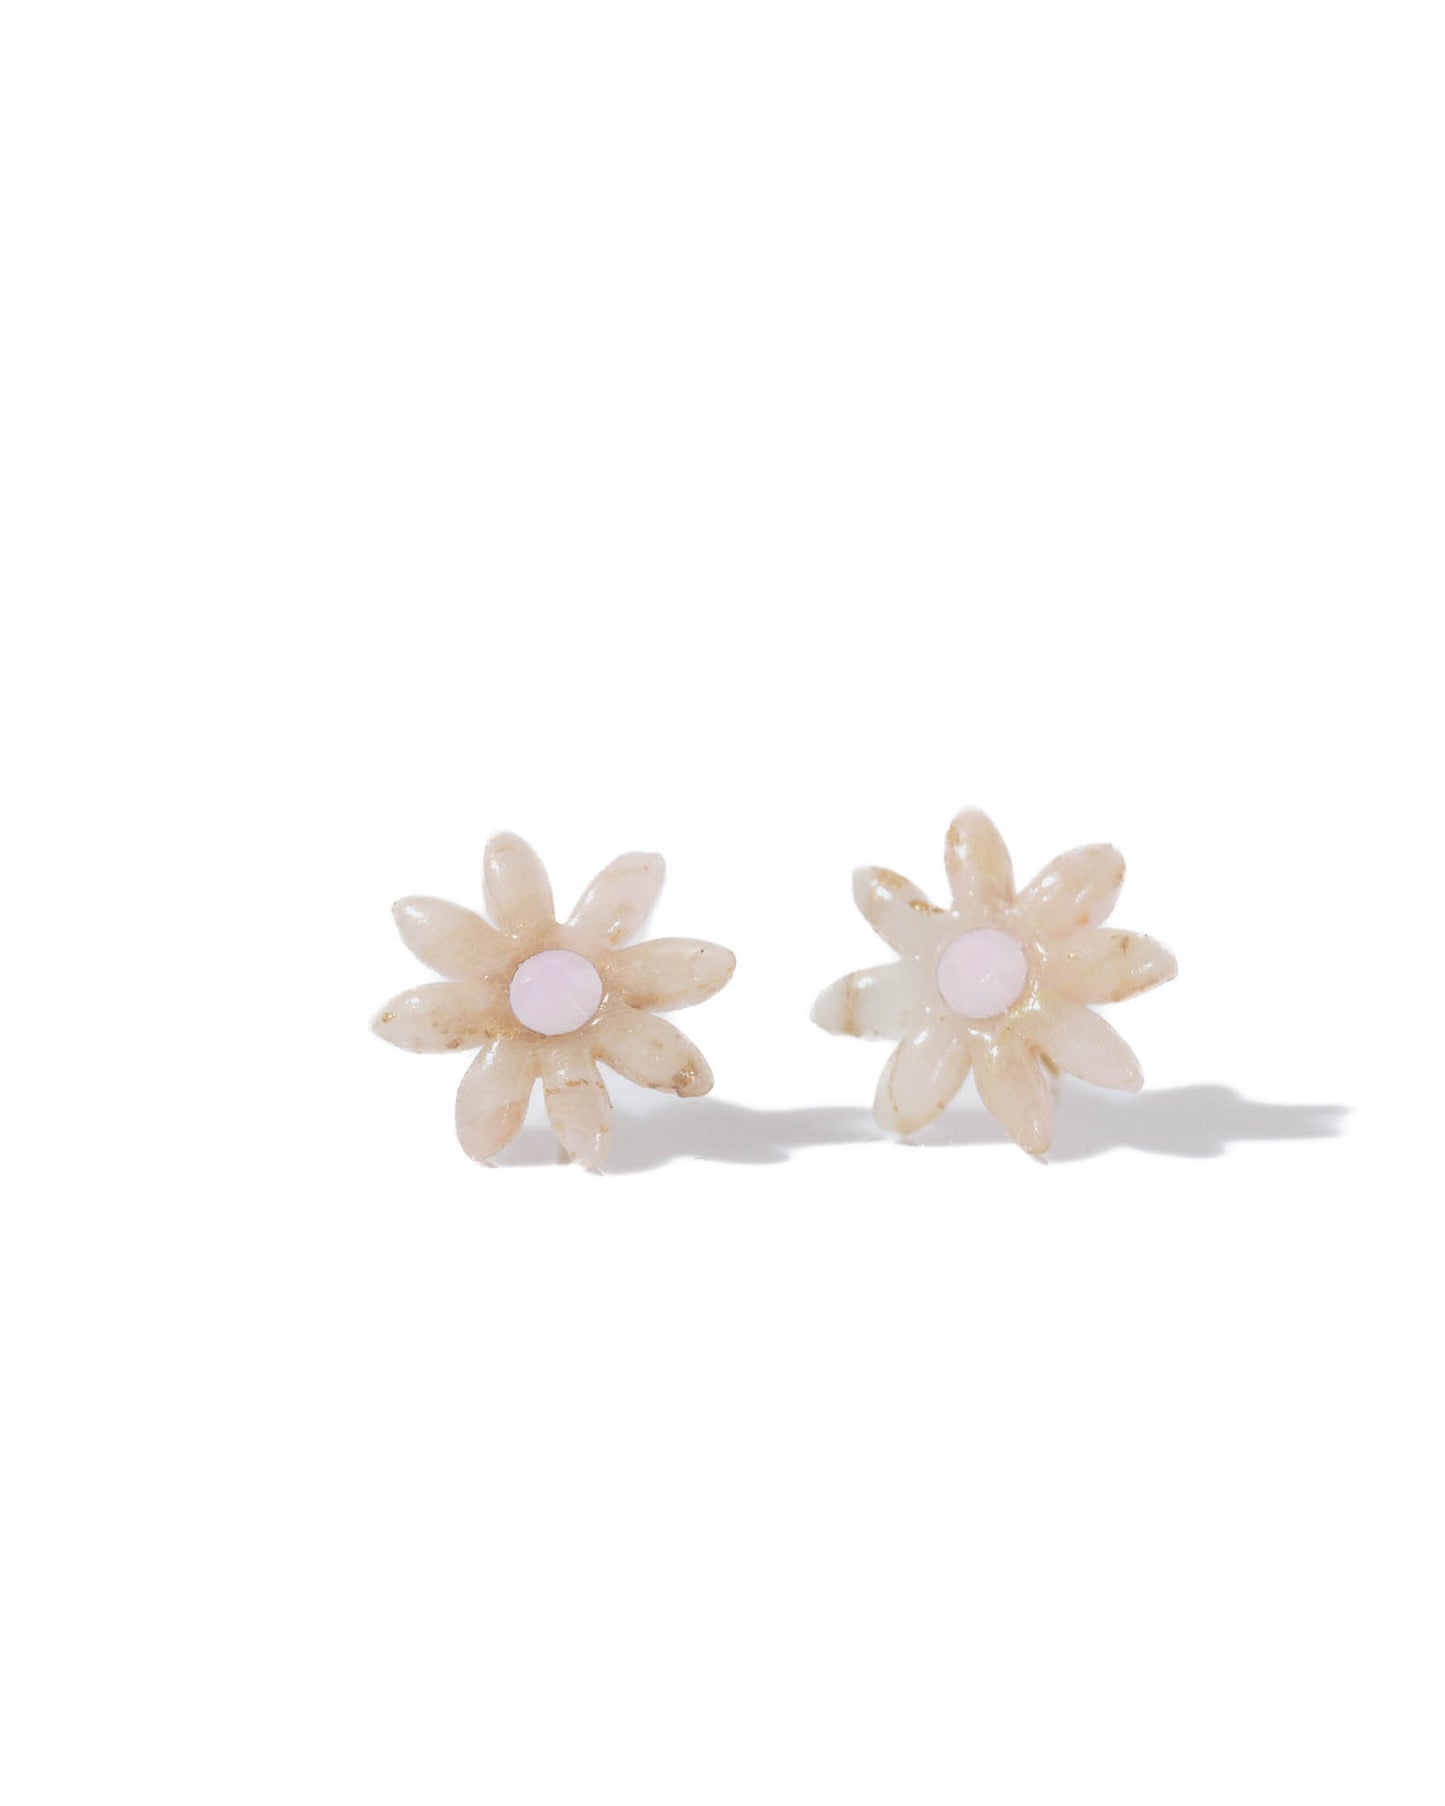 Tiny Flowers Earrings • Modern earrings • Clay earrings • Everyday earrings